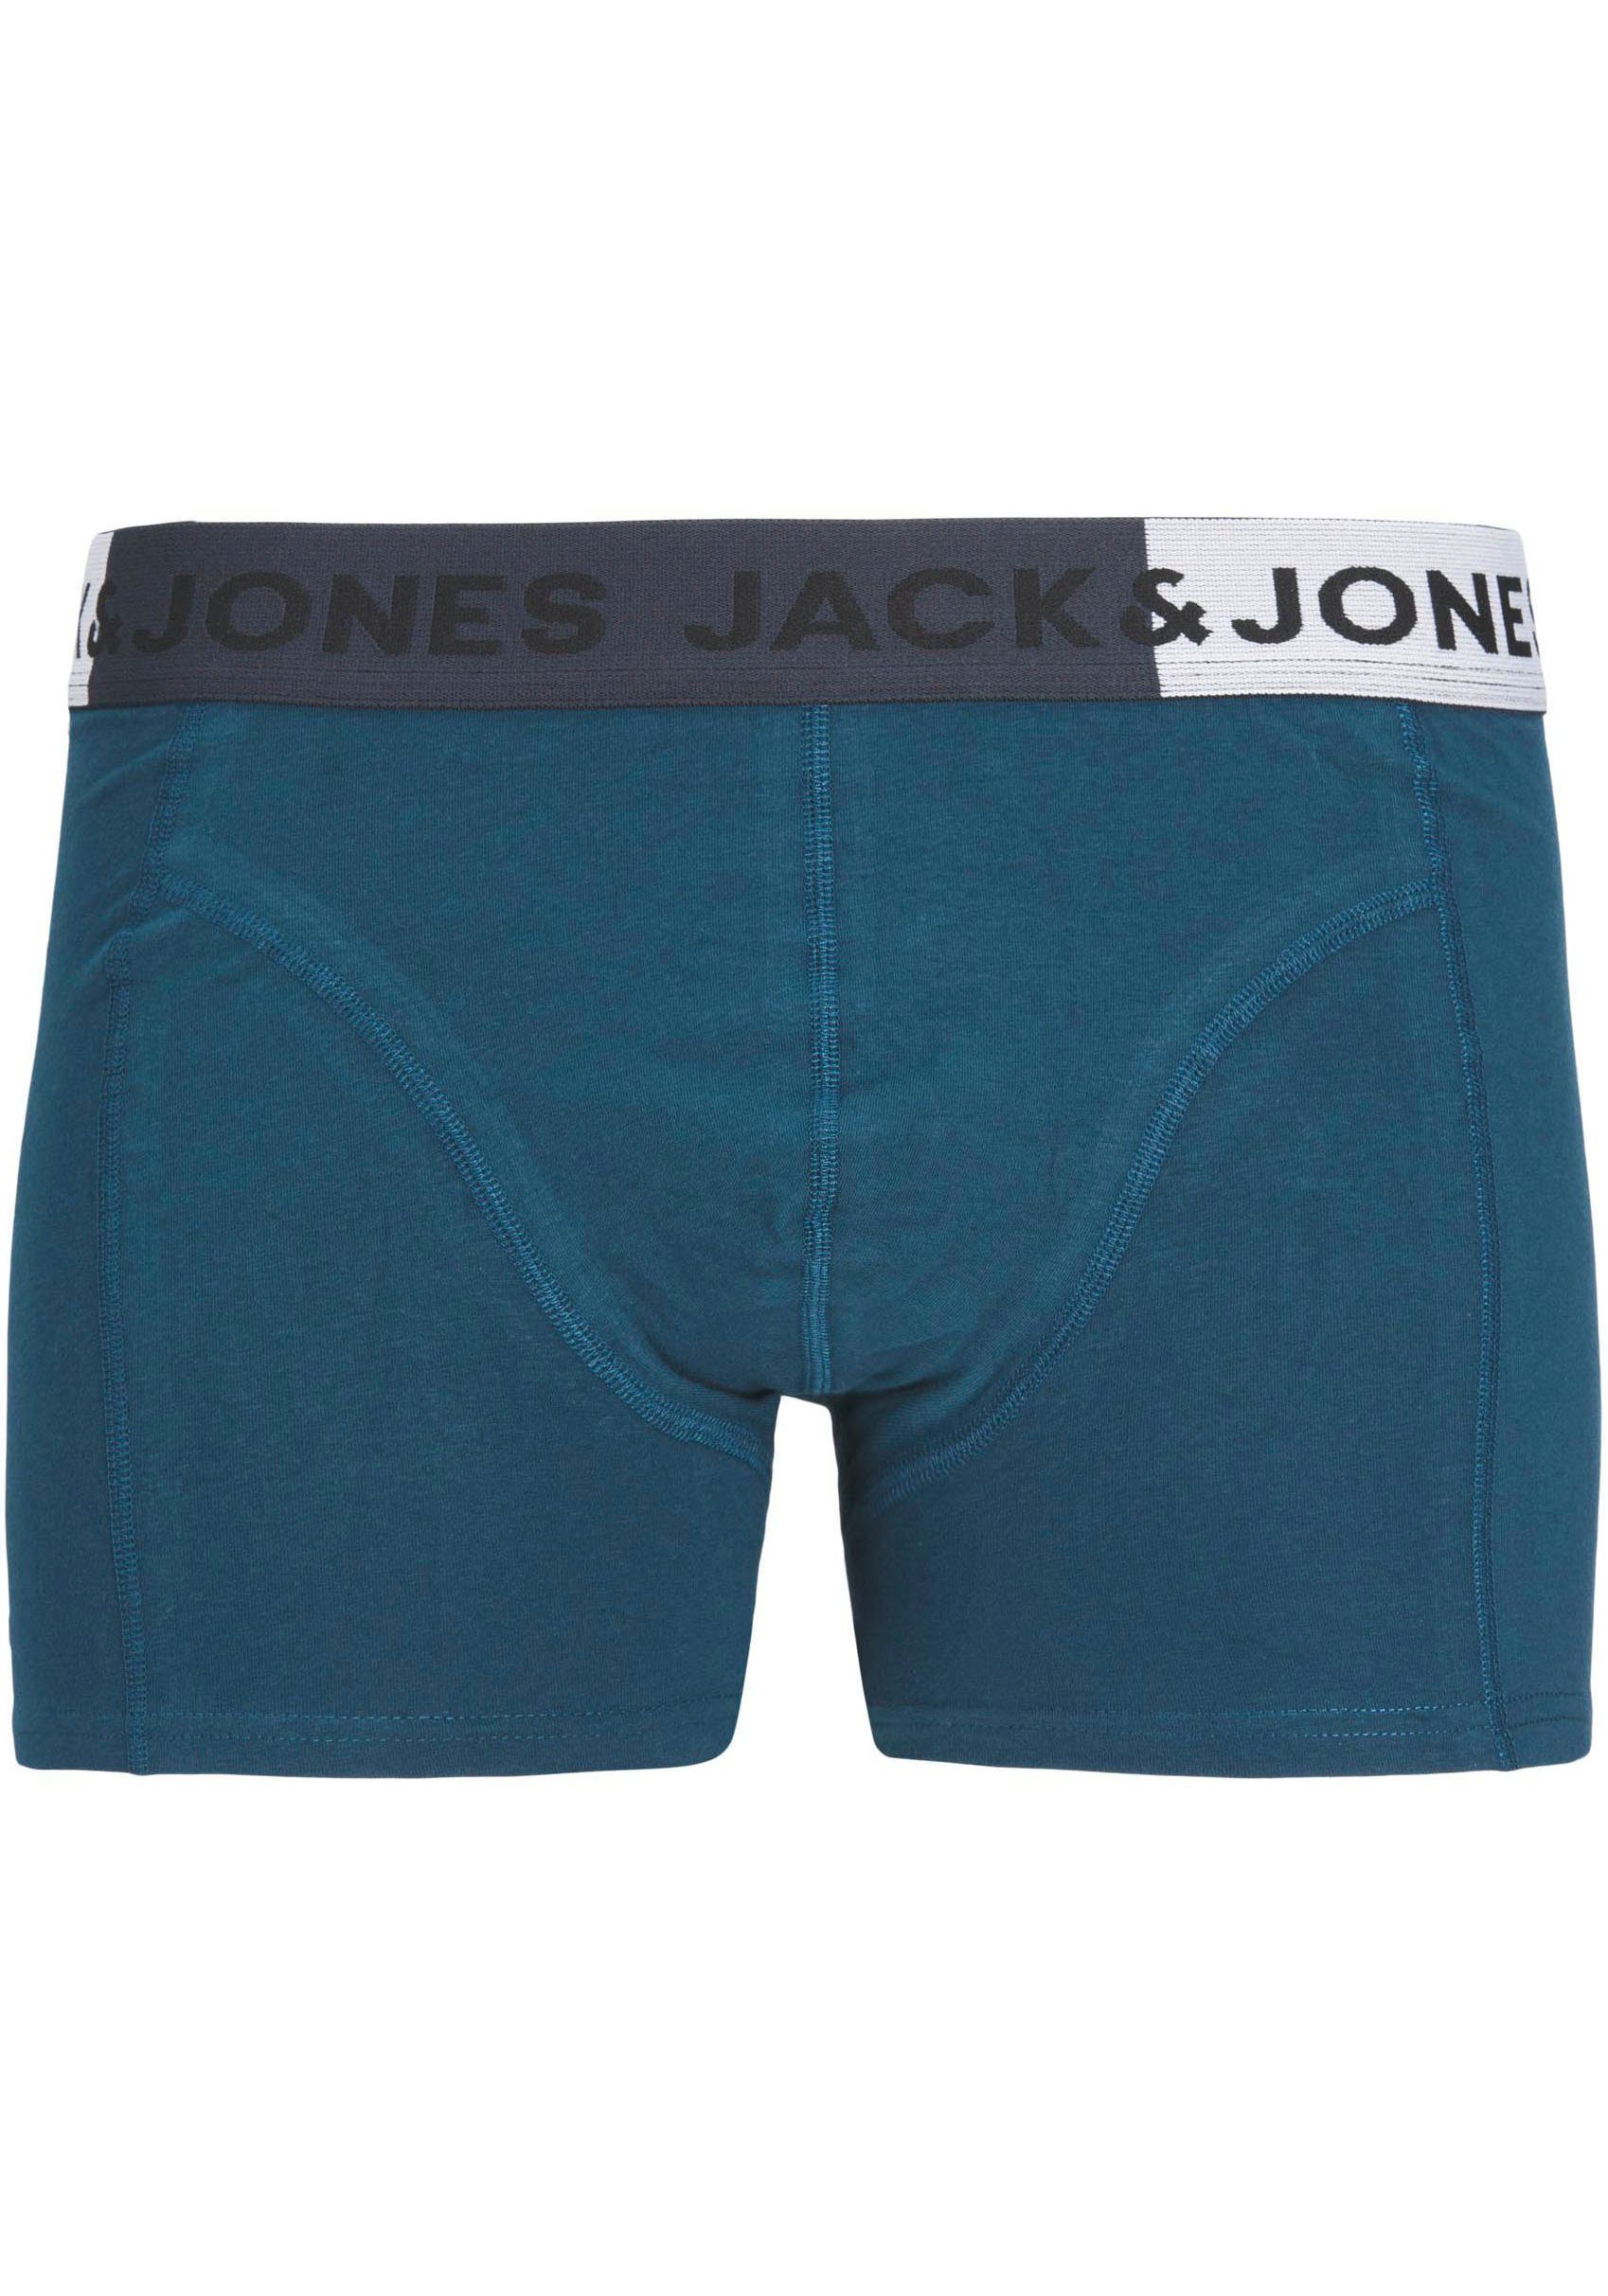 Junior (3-St) JACCOLOR & BLOCK Boxershorts TRUNKS Jack Jones 3 P